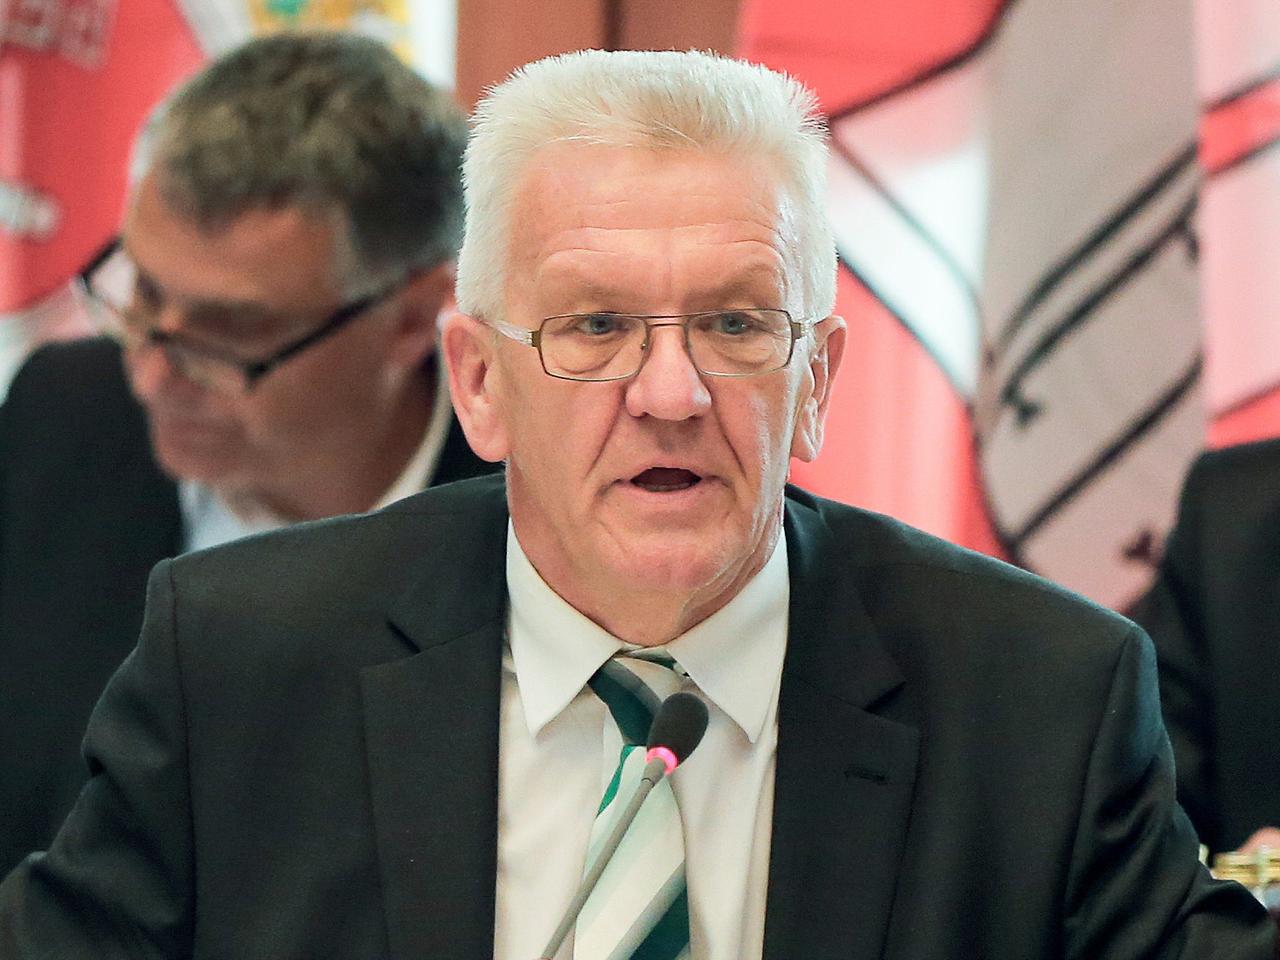 Baden-Württembergs Ministerpräsident Winfried Kretschmann (Grüne) leitete vor dem Gipfel eine Sondersitzung der Ministerpräsidenten.